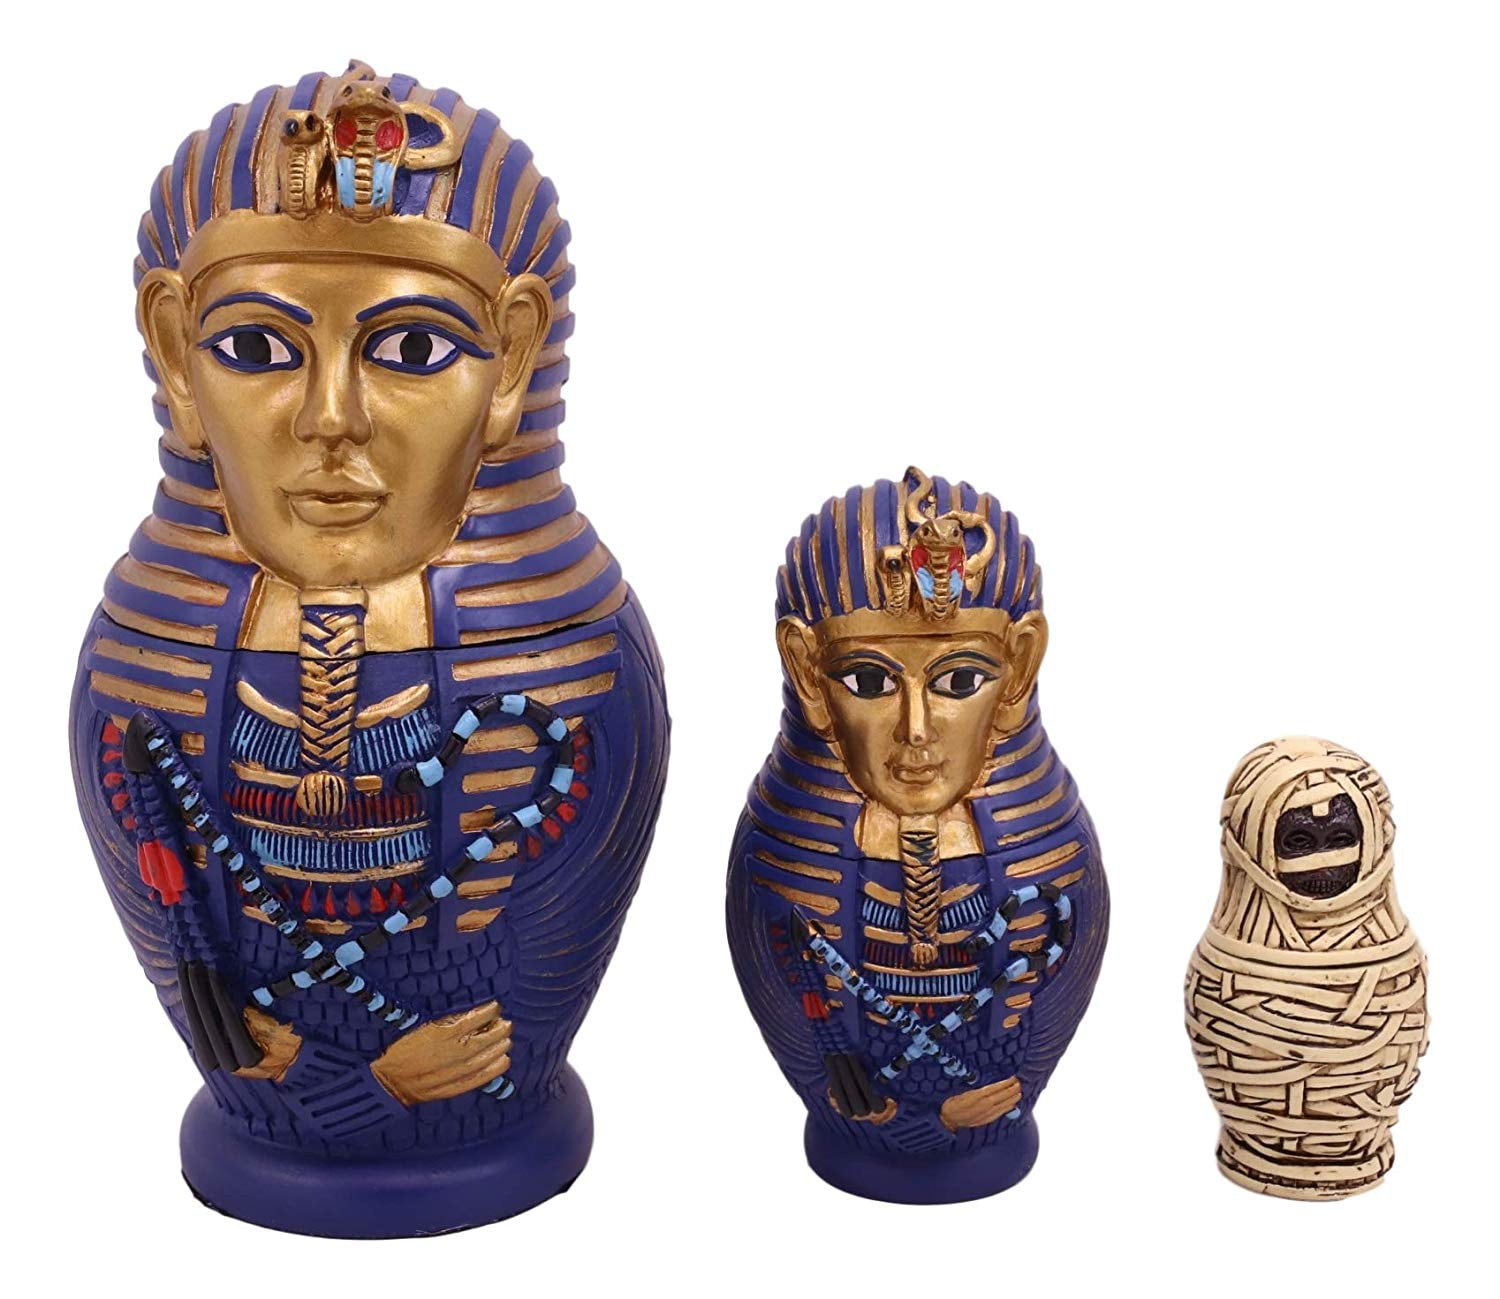 Resin Egyptian King TUT Mummy Nesting Dolls Collectible Figurine Home Decor 6"H 